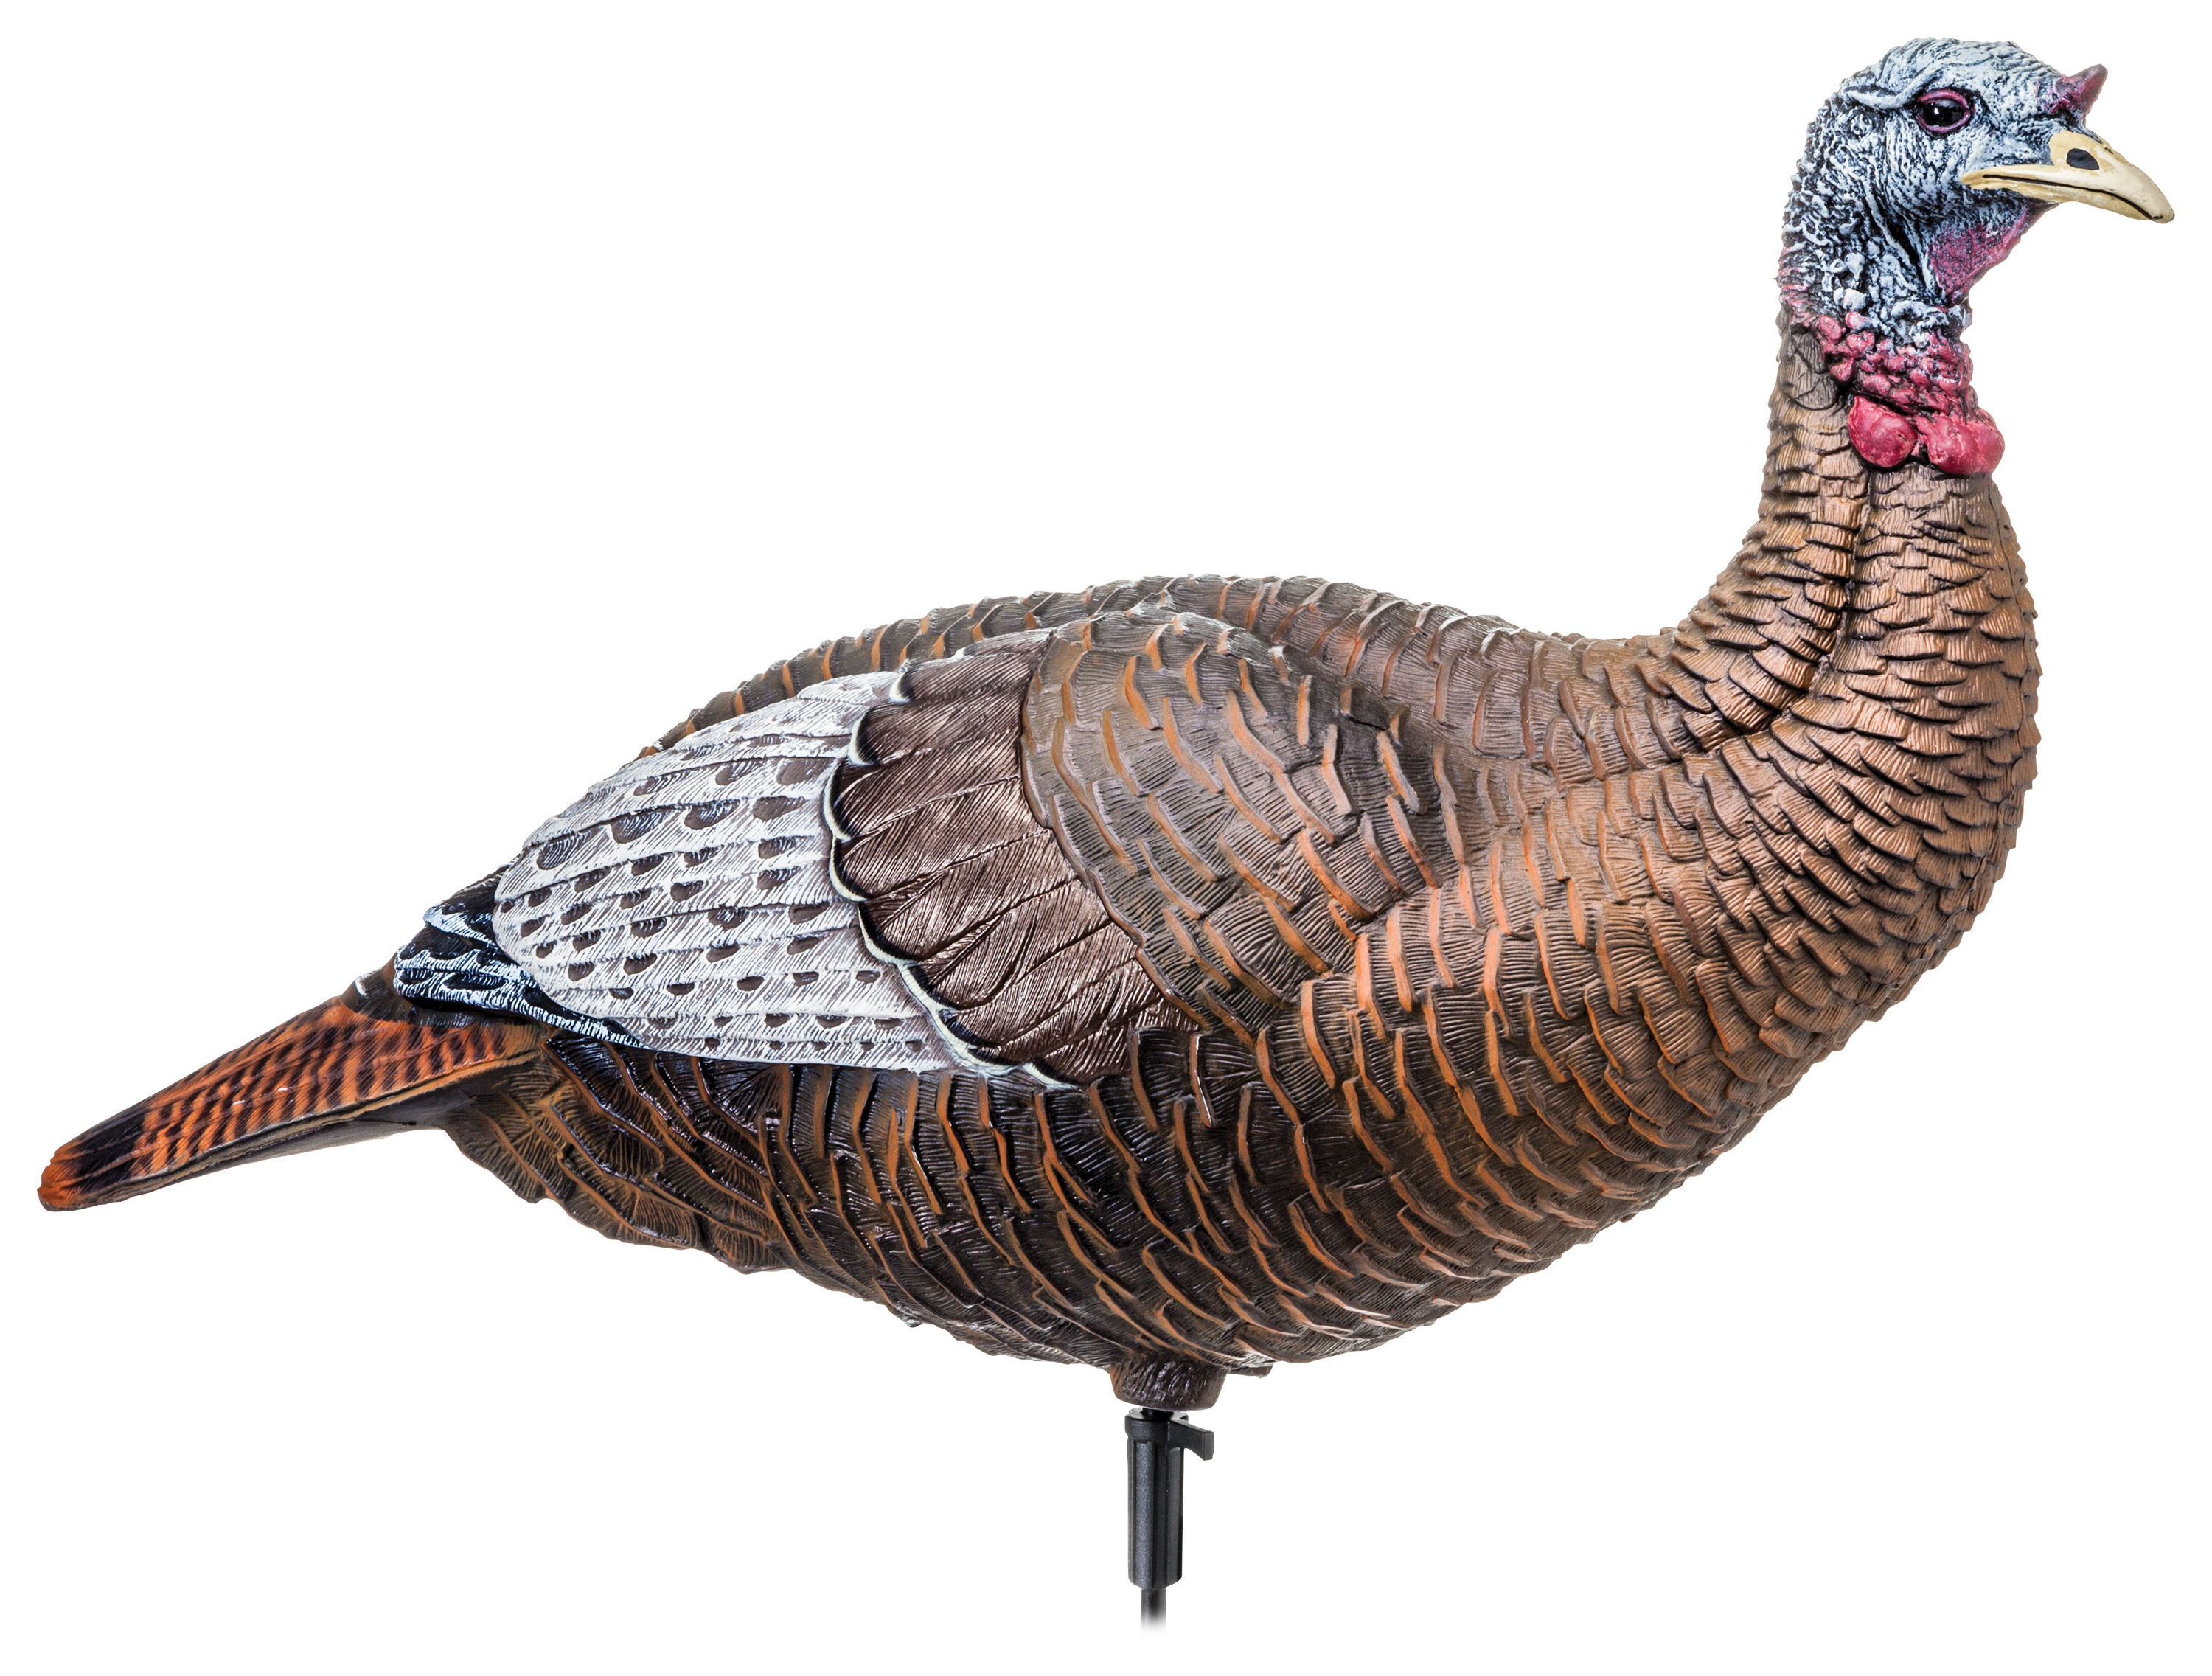 flextone Thunder Chick Upright Hen Turkey Decoy - Brown